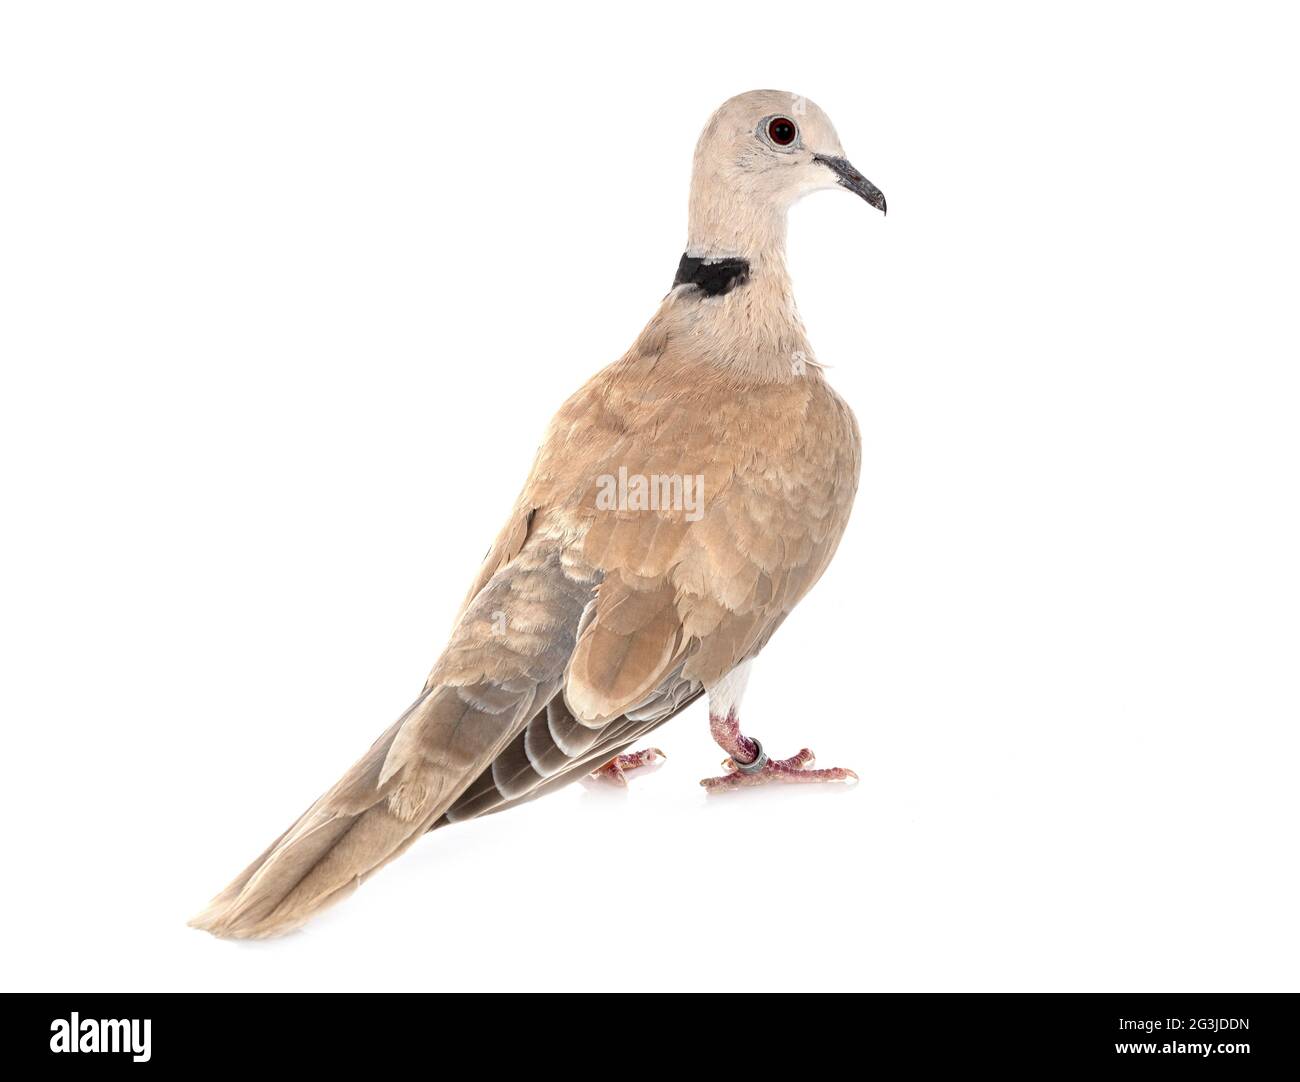 White collared pigeon Imágenes recortadas de stock - Alamy